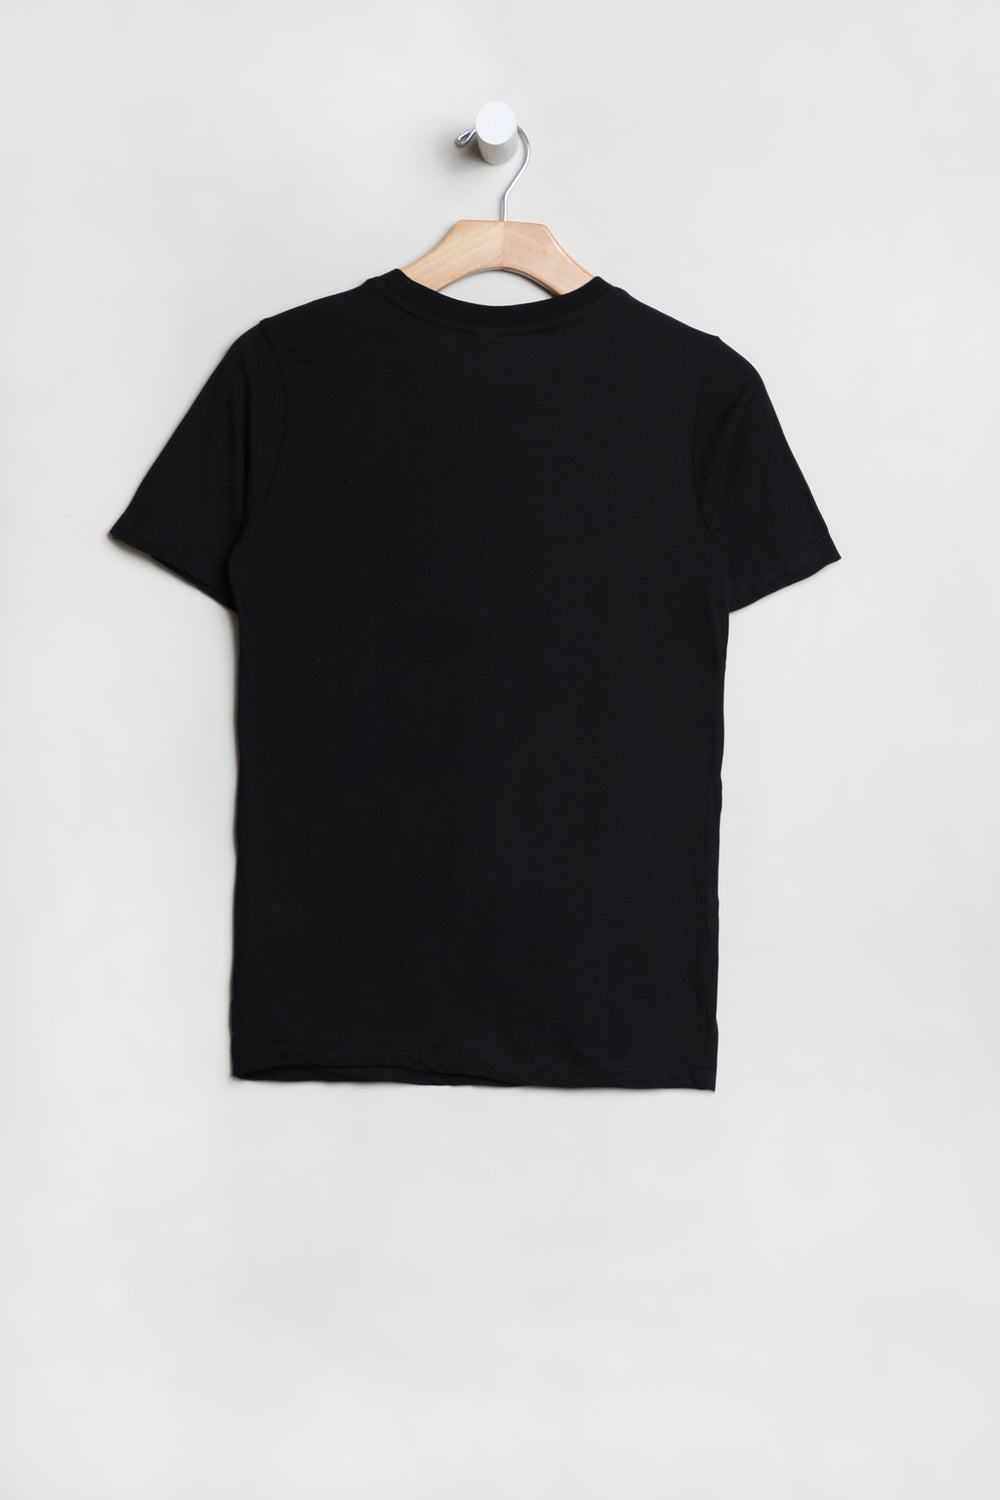 West49 Youth Drift King T-Shirt Black